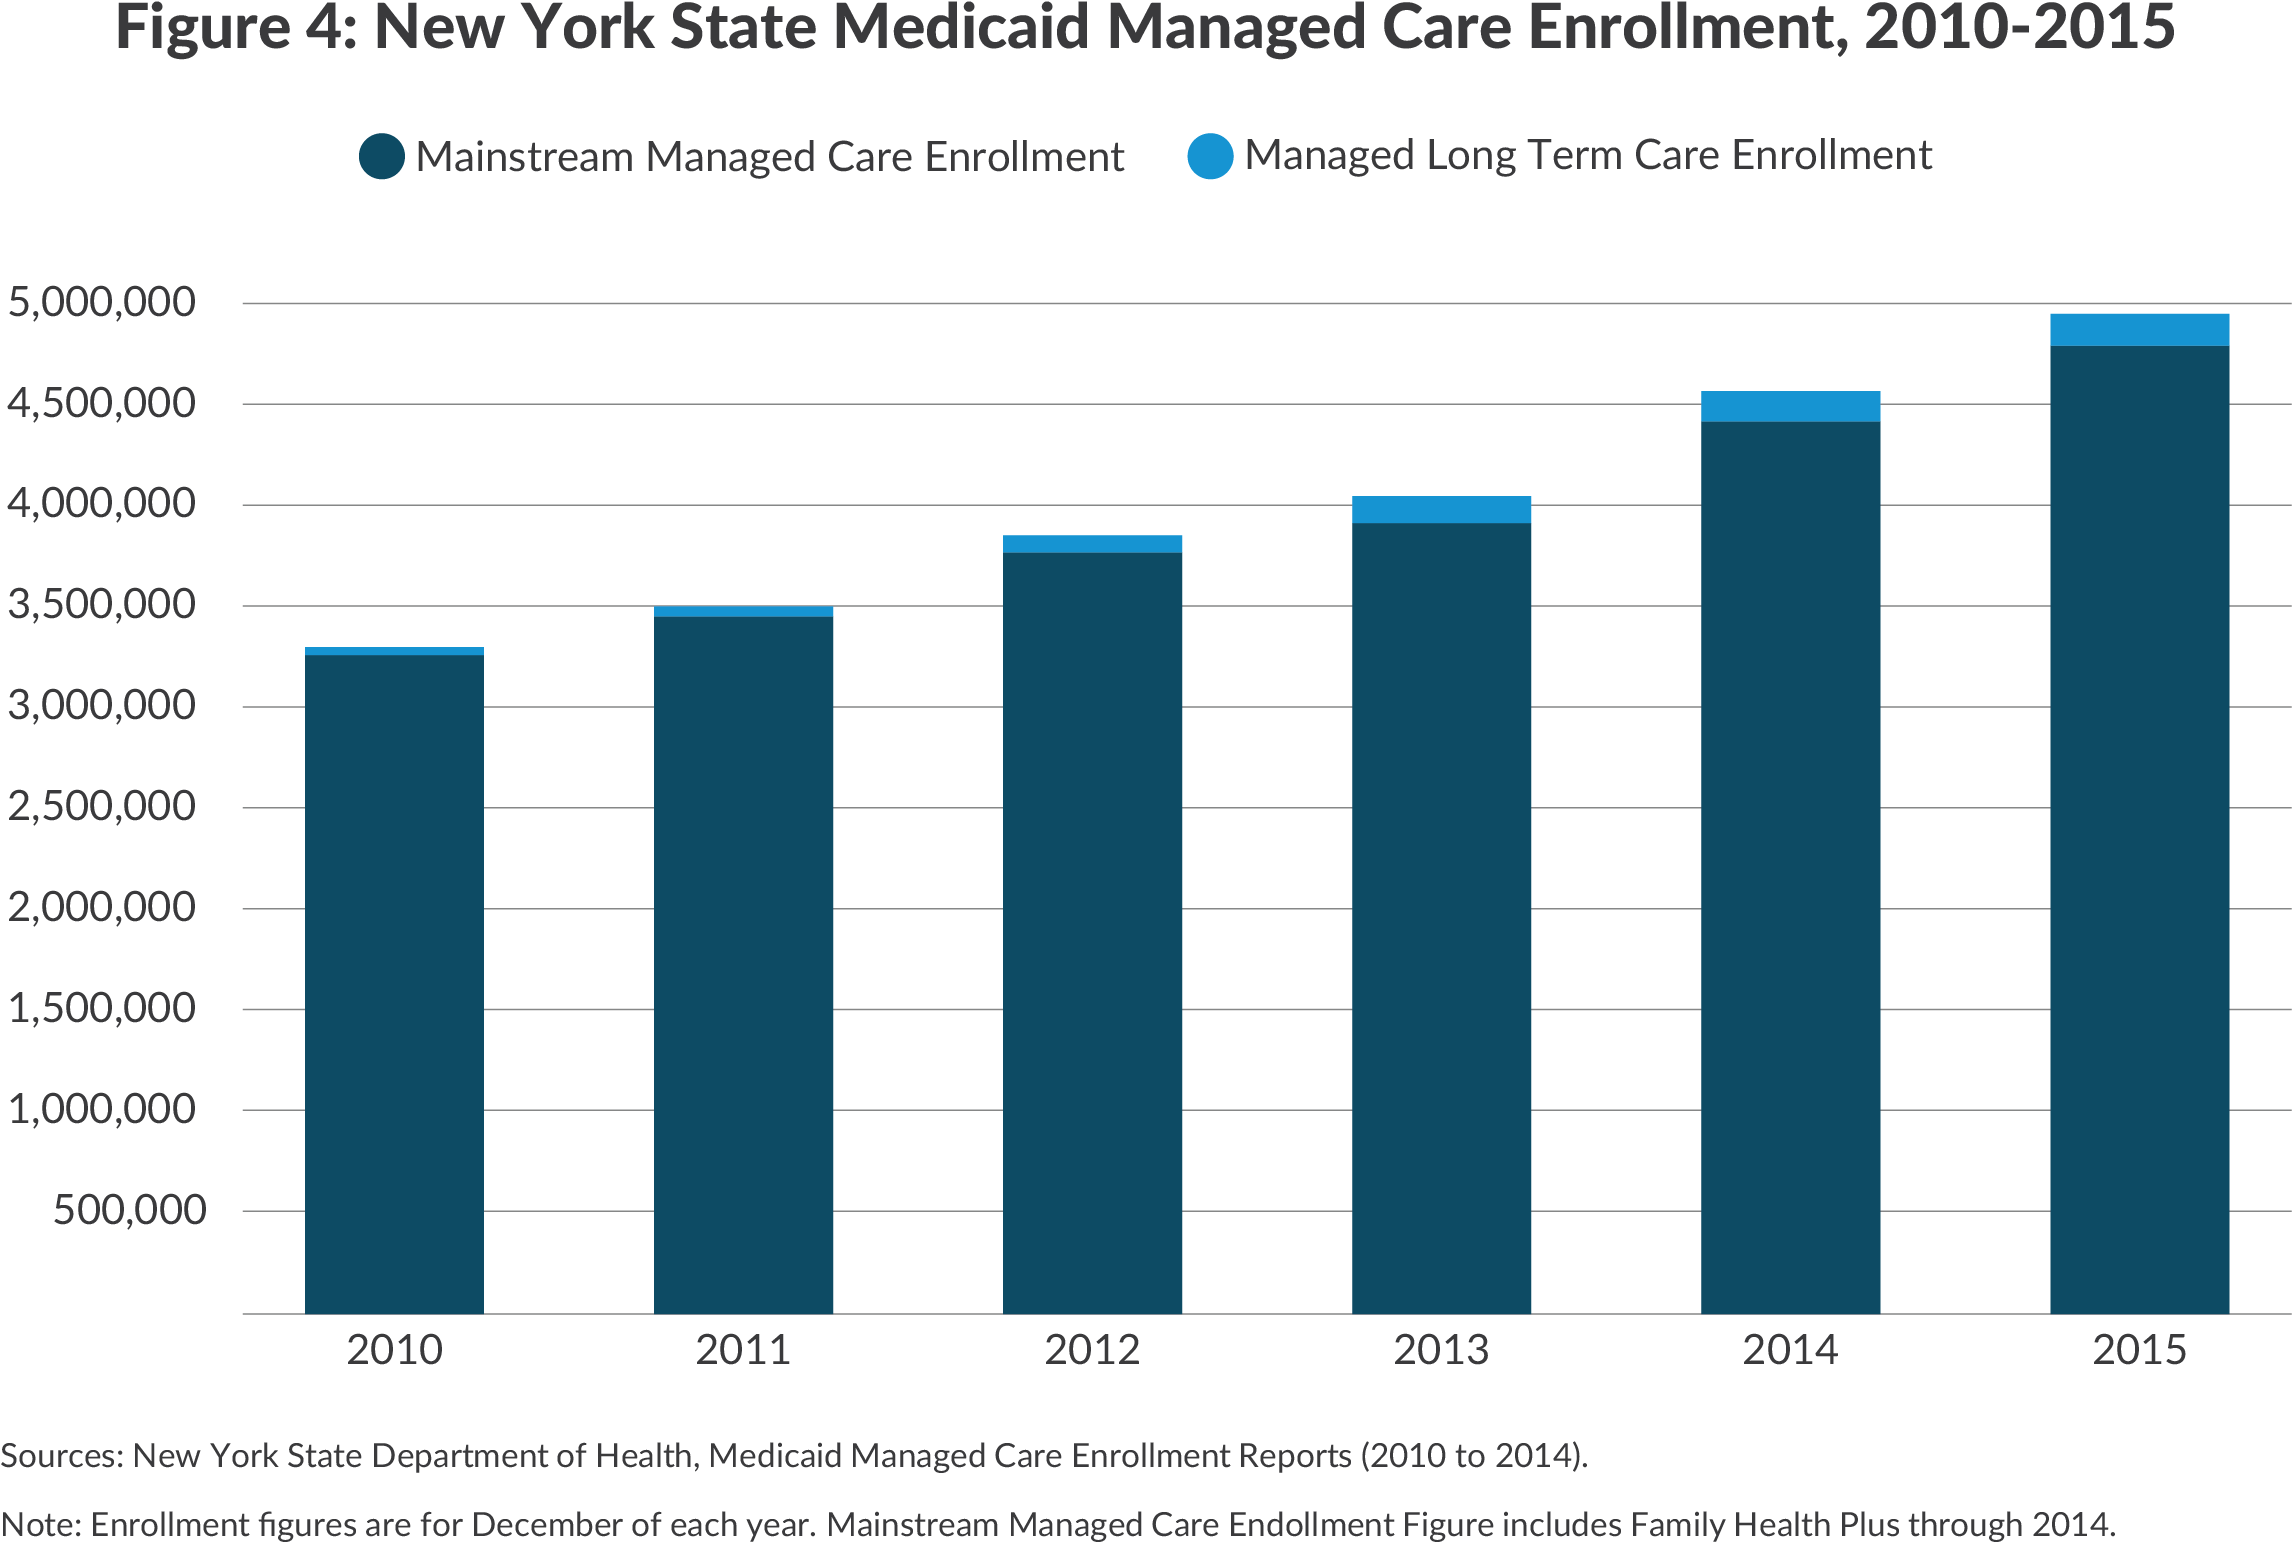 NY Medicaid managed care enrollment, 2010-2015